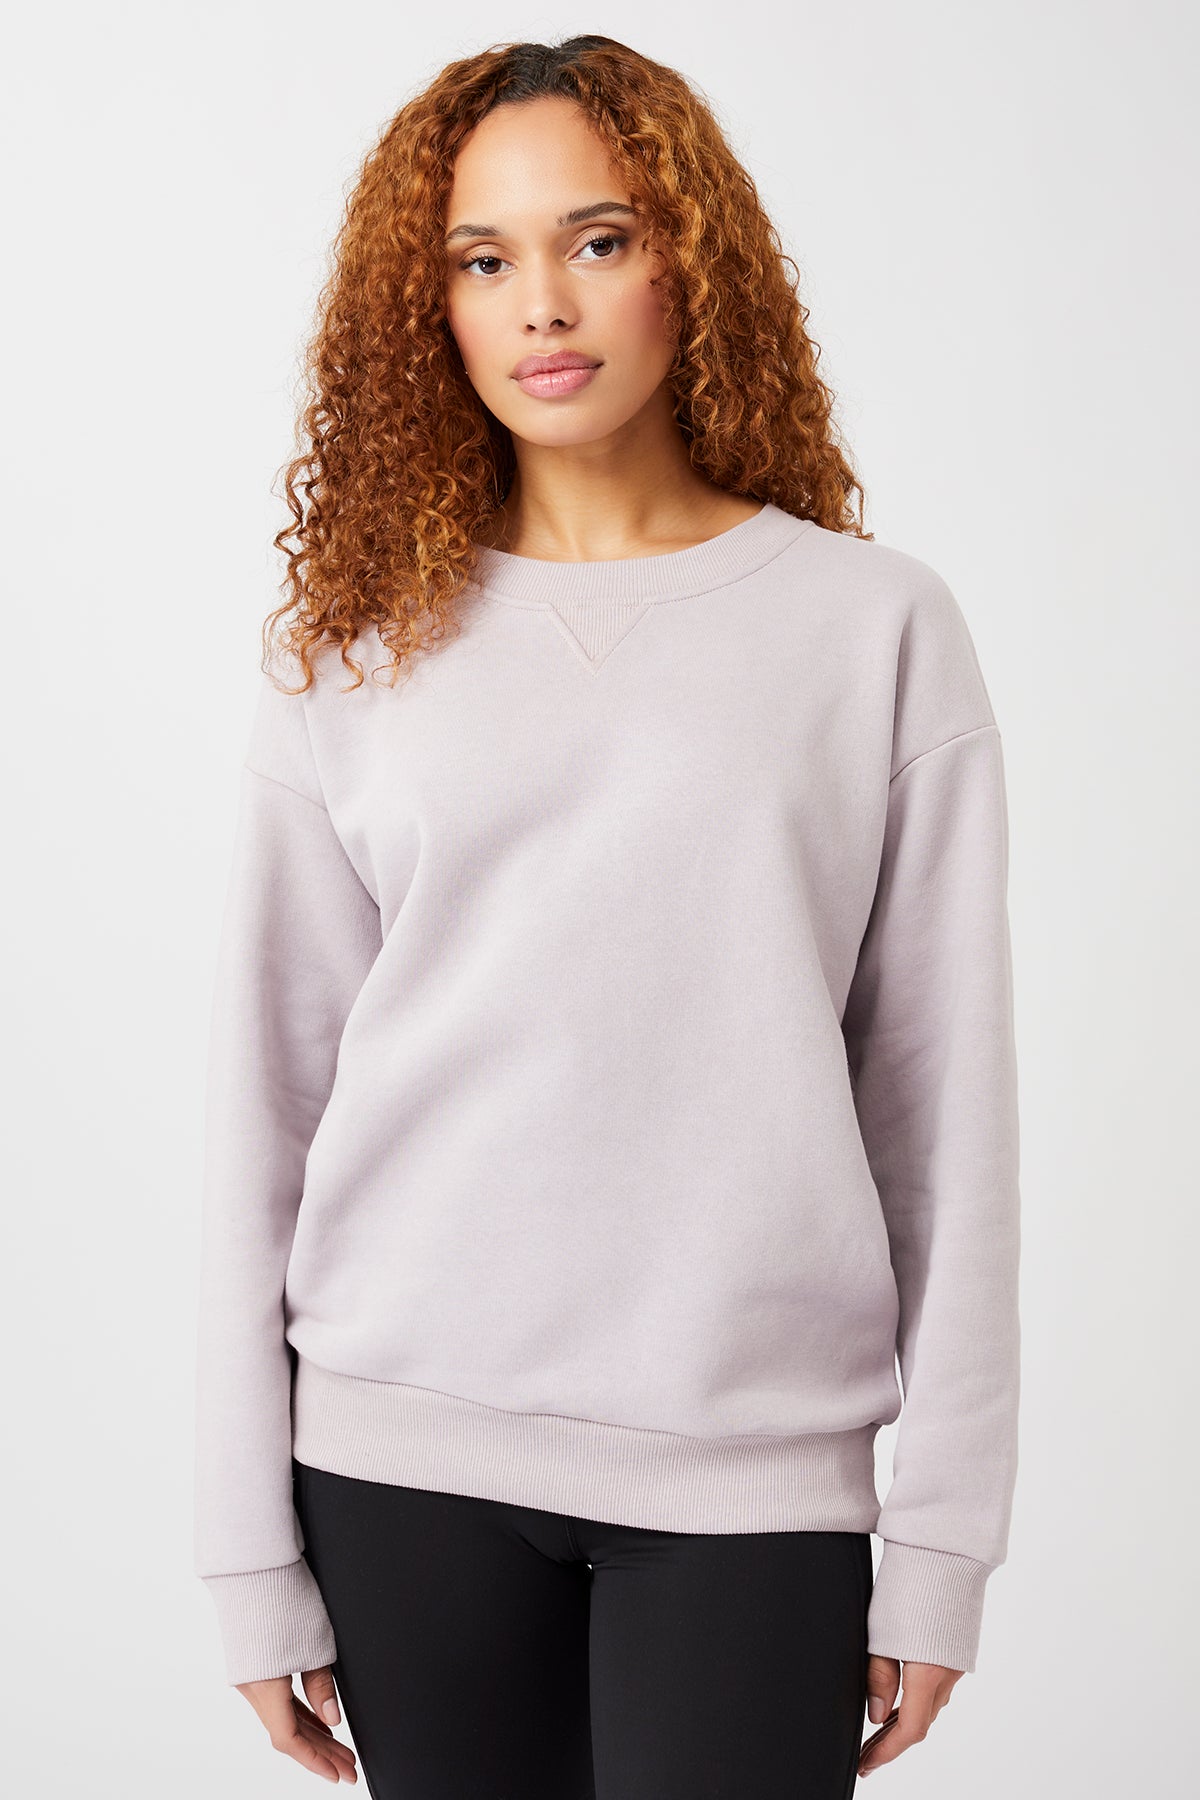 Mandala Yoga Pullover Rose Front - Natural Dye Sweater